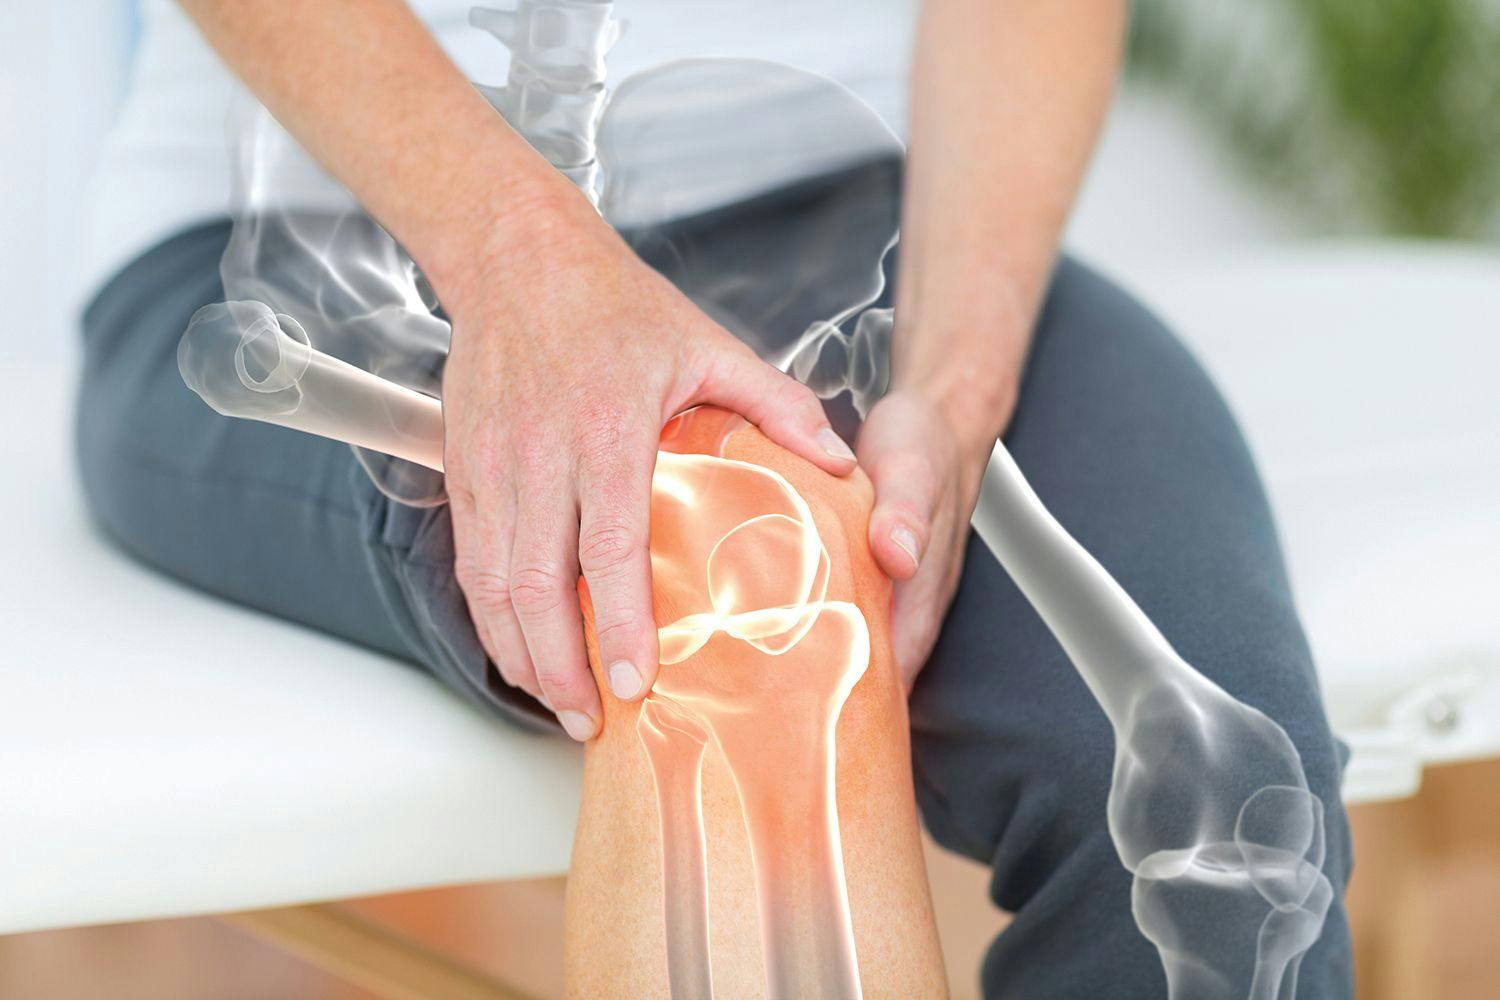 Man holding knee with knee pain | Image credit: wavebreak3 - stock.adobe.com